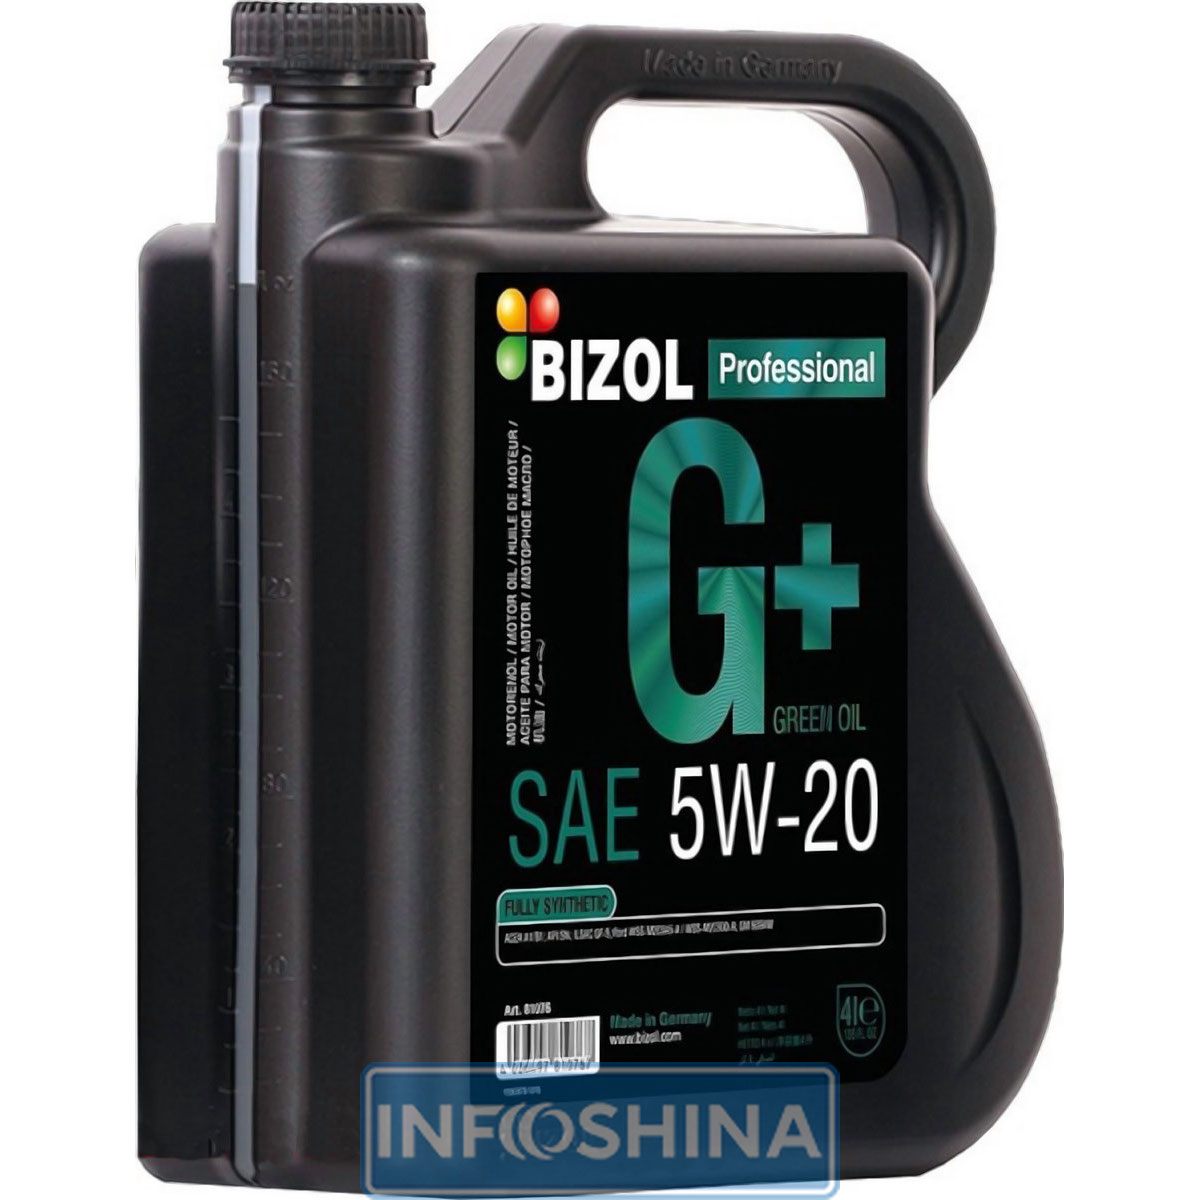 Bizol Green Oil+ 5W-20